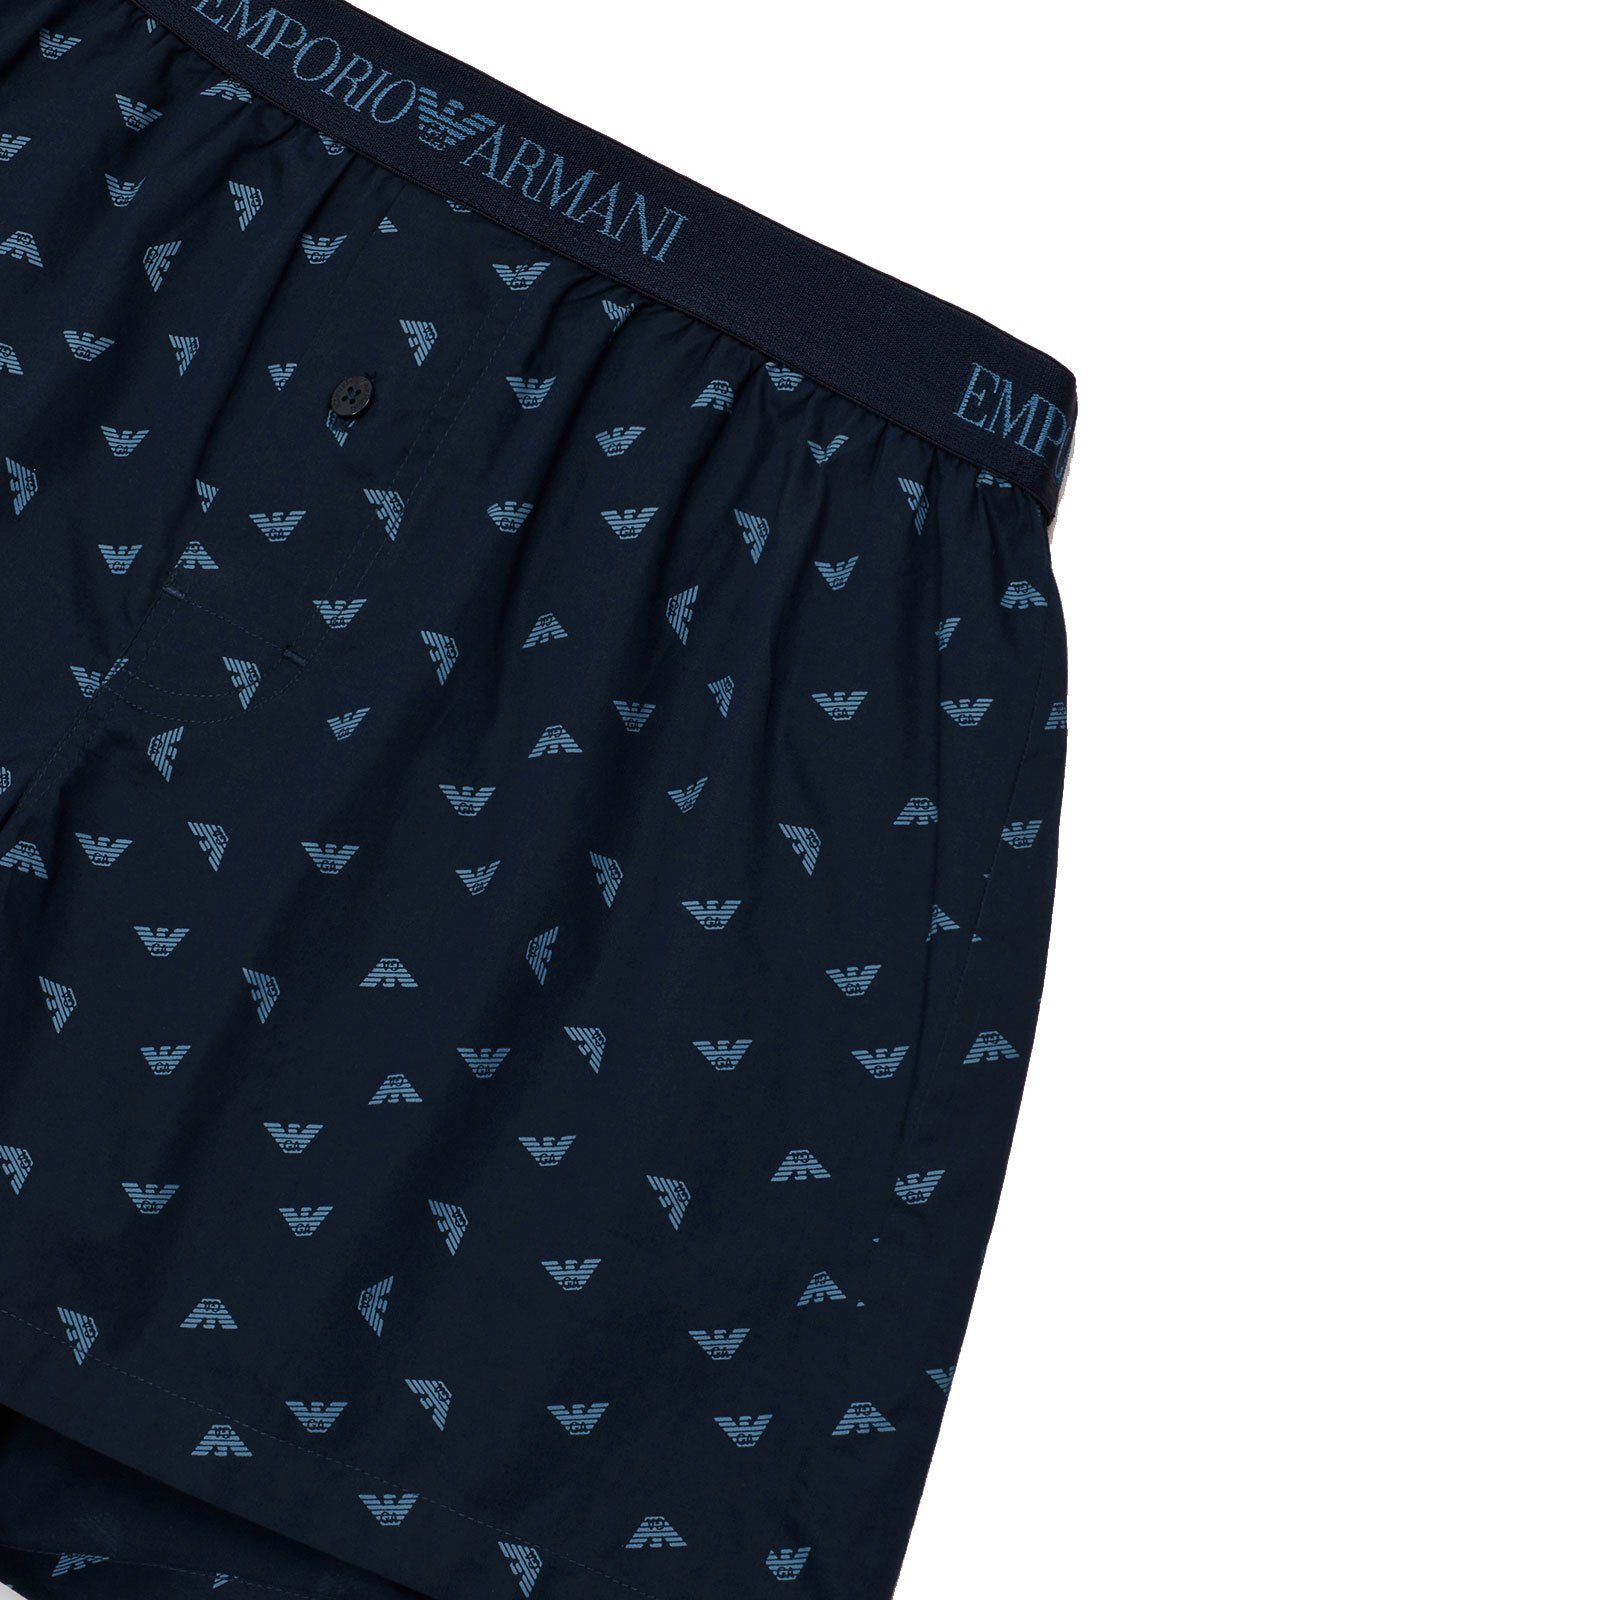 Emporio Armani Loungewear Boxershorts kleinen aus Muster Boxer (1-St) Markenlogos mit